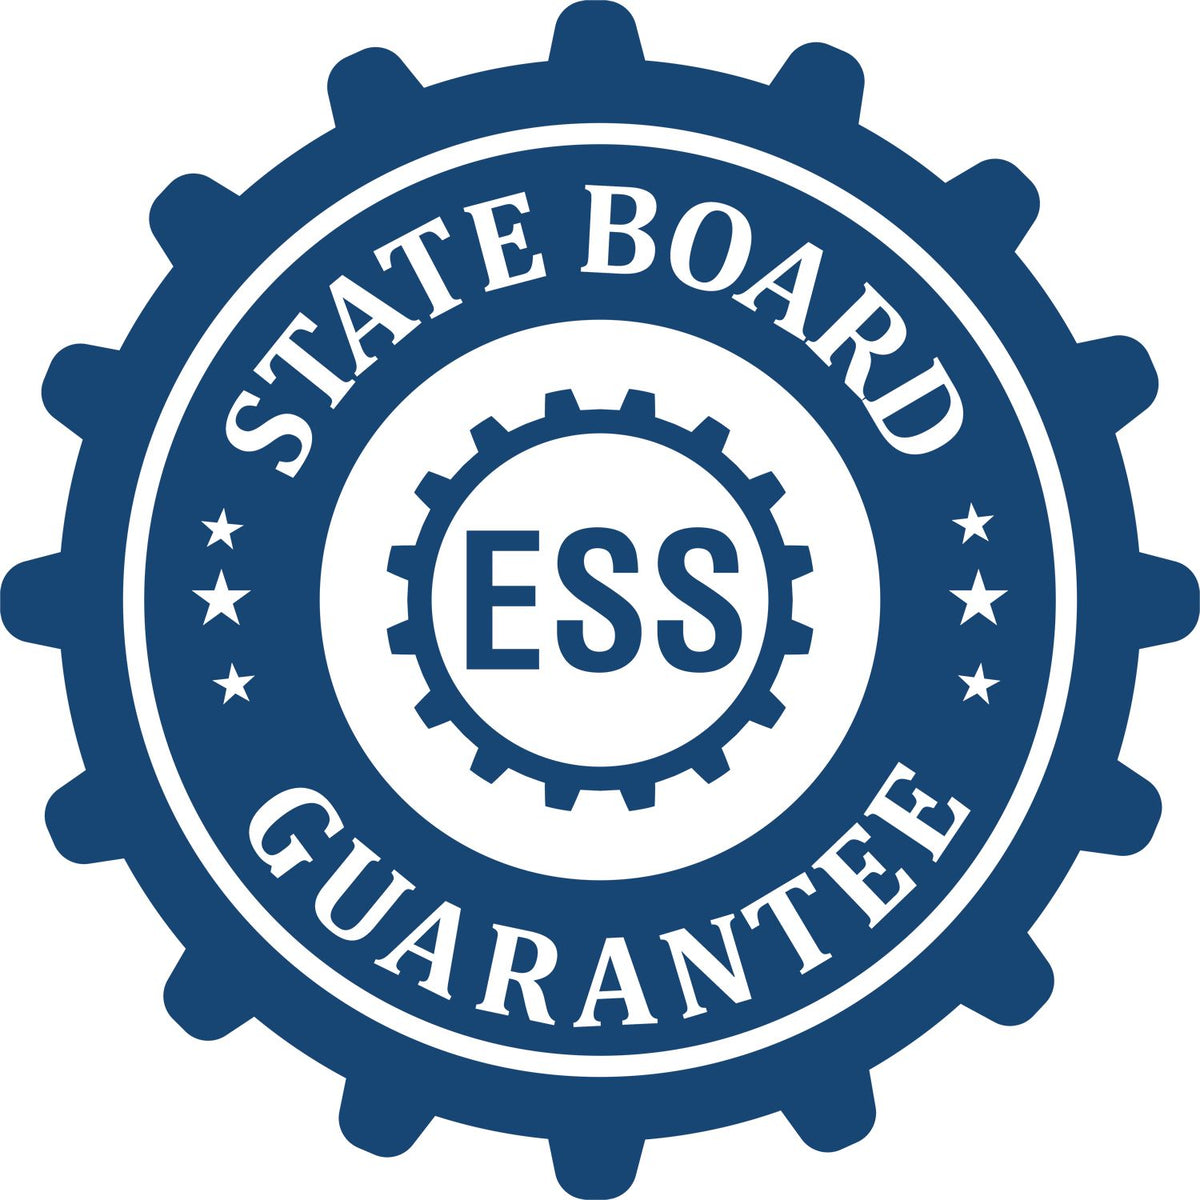 An emblem in a gear shape illustrating a state board guarantee for the Extended Long Reach Nebraska Surveyor Embosser product.